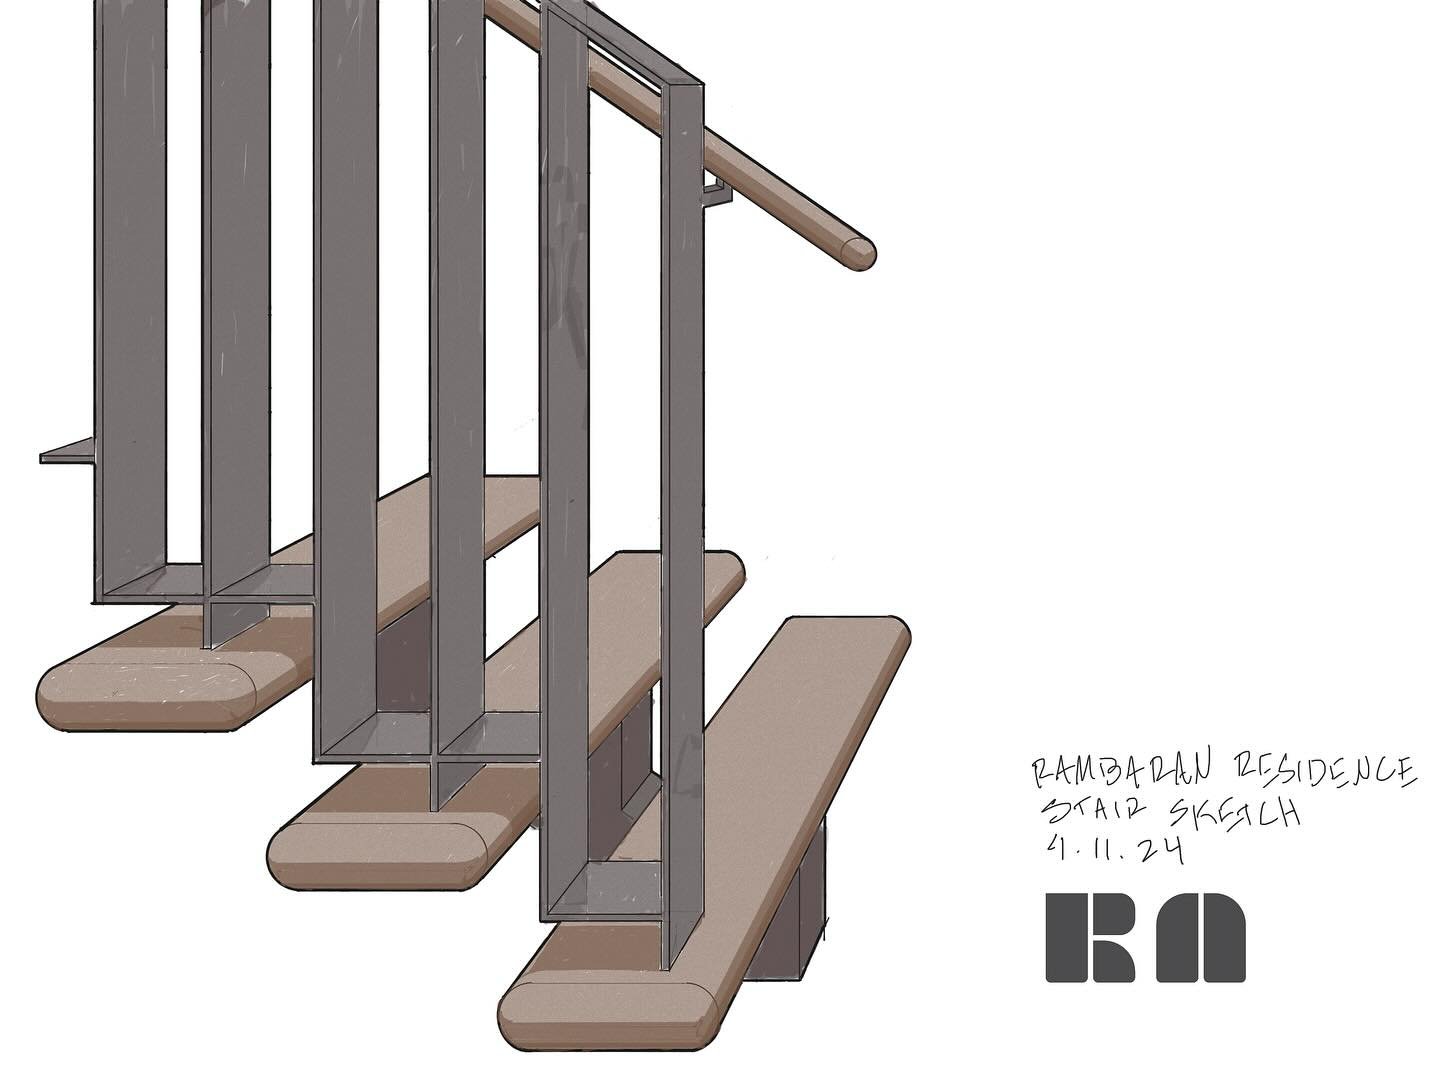 Rambaran Residence | Stair Sketch | Design Process 
.
.
.
Hand sketch of tread and rail design. 
#sketch #stair #rockawaybeach #nyc #illustration #interiordesign #interiorarchitecture #handsketch #groundupconstruction #residentialdesign